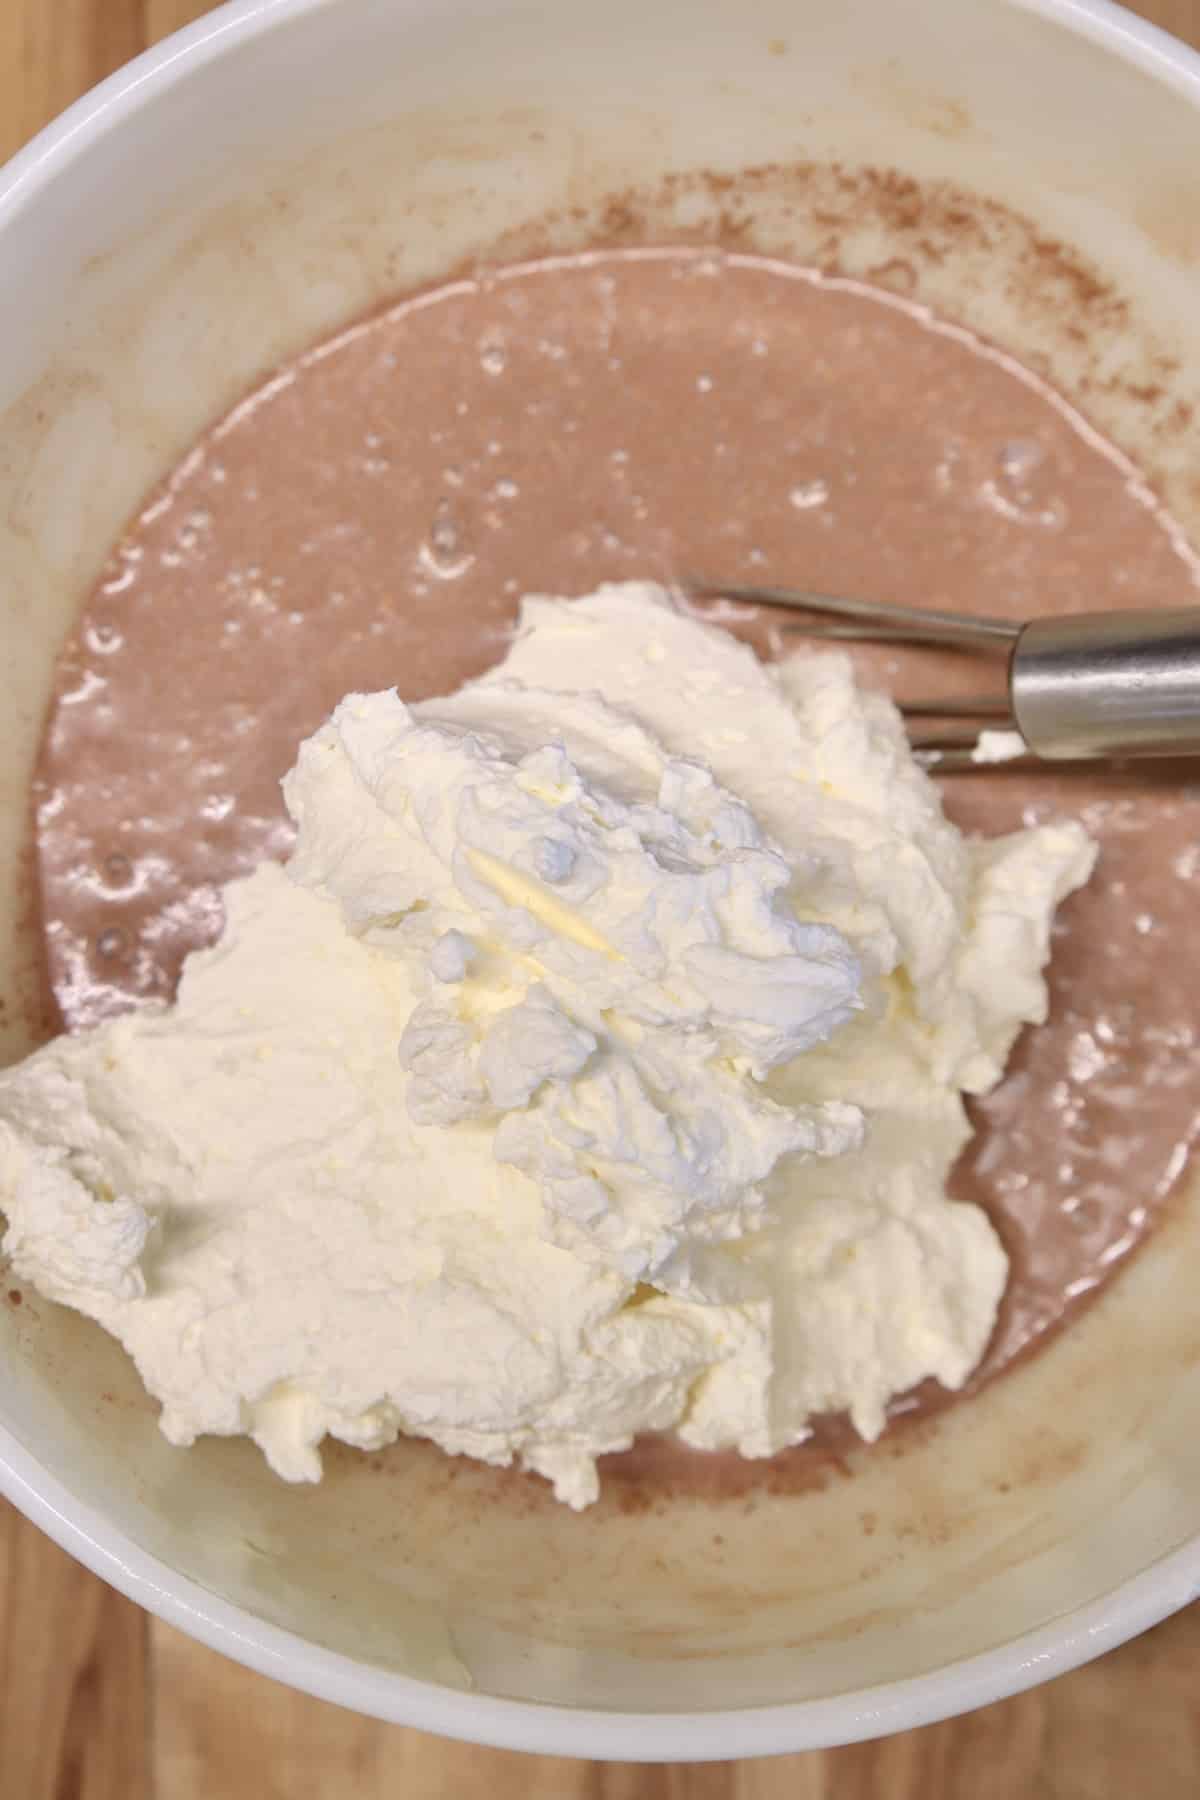 Whipped cream in bowl of cinnamon ice cream base.